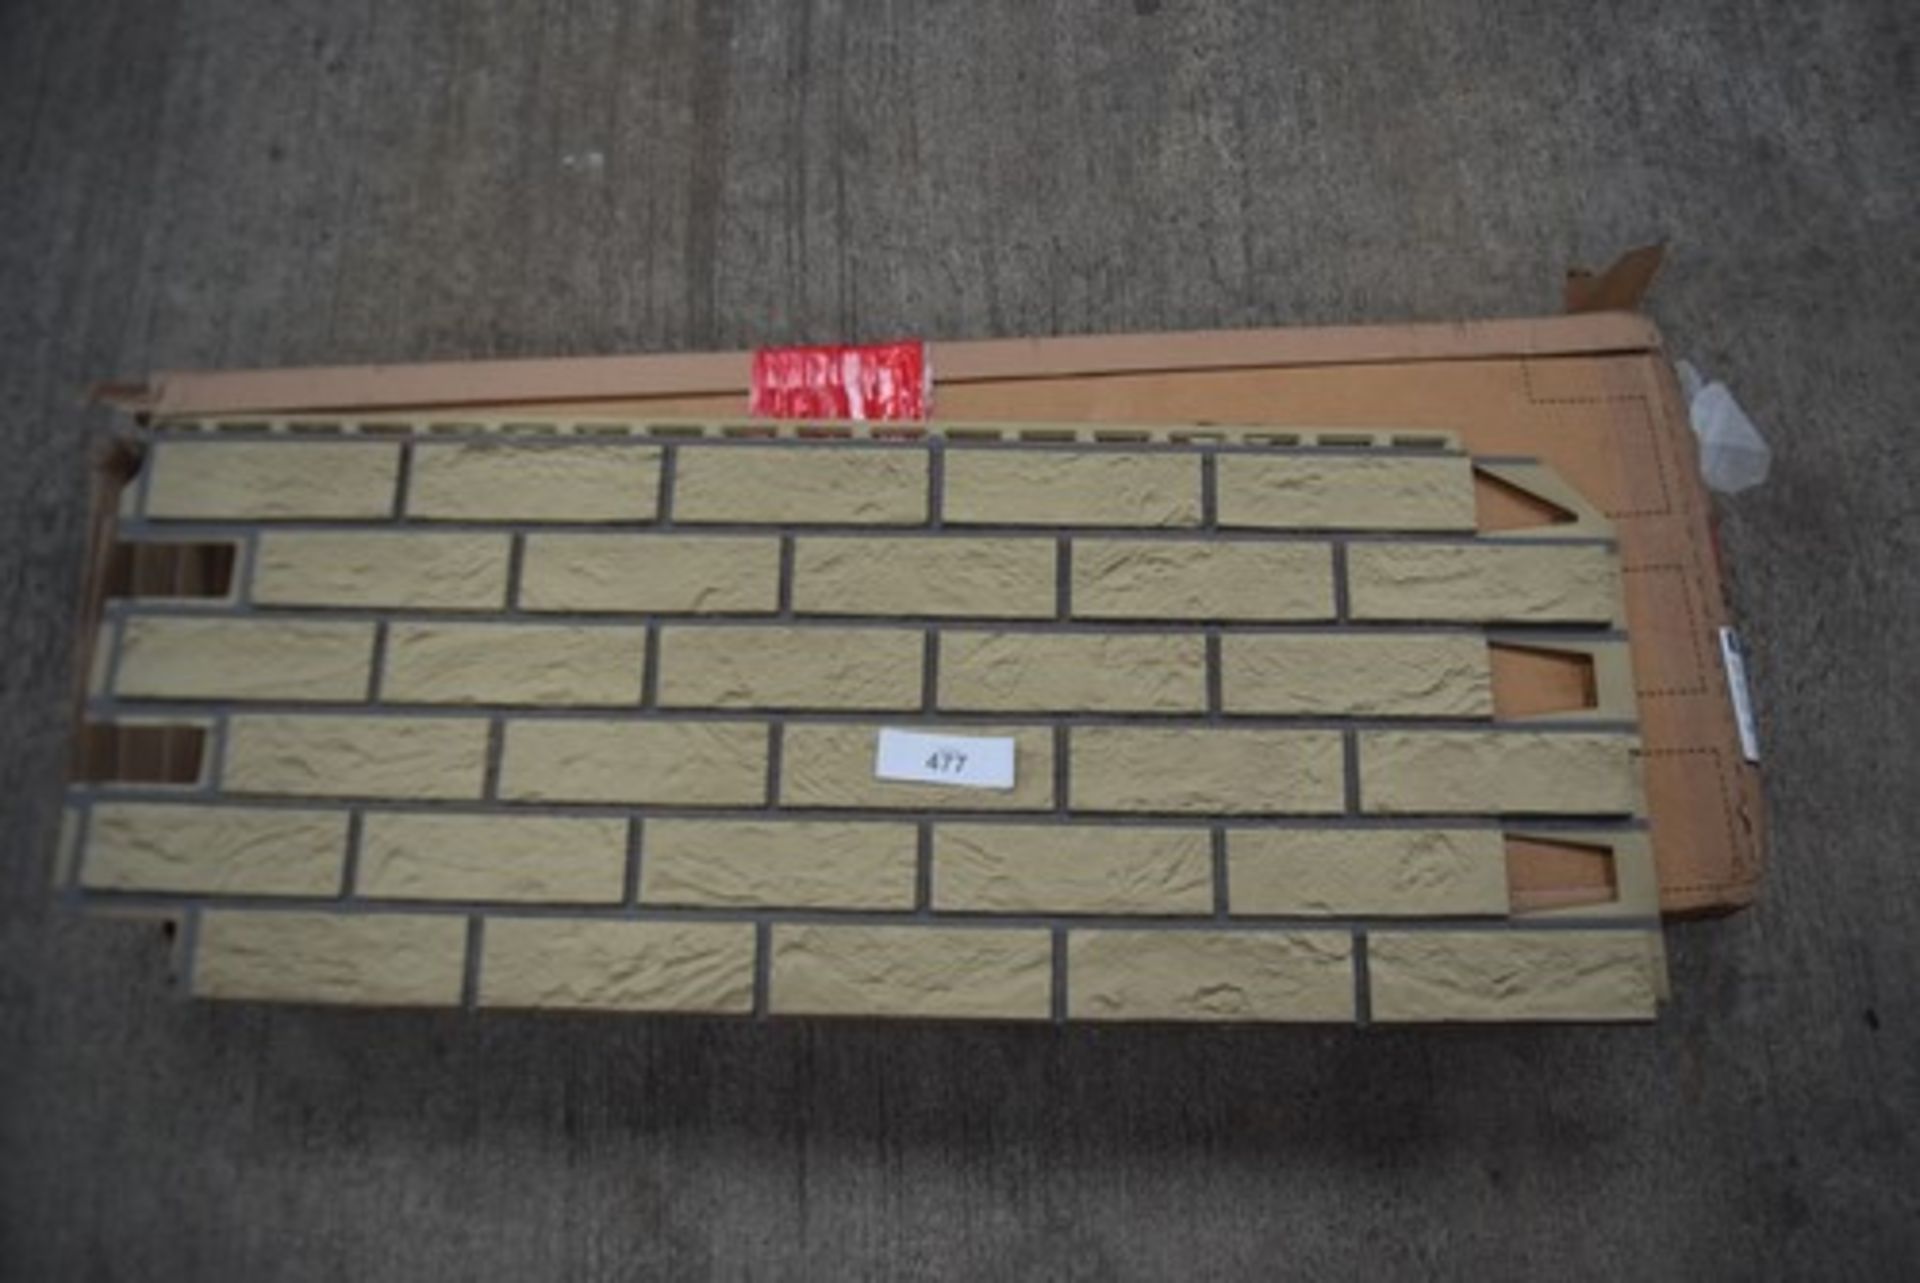 10 x 1m x 42cm panels of Vox Solid System brick facade, item No: 3009003 - new (TS)